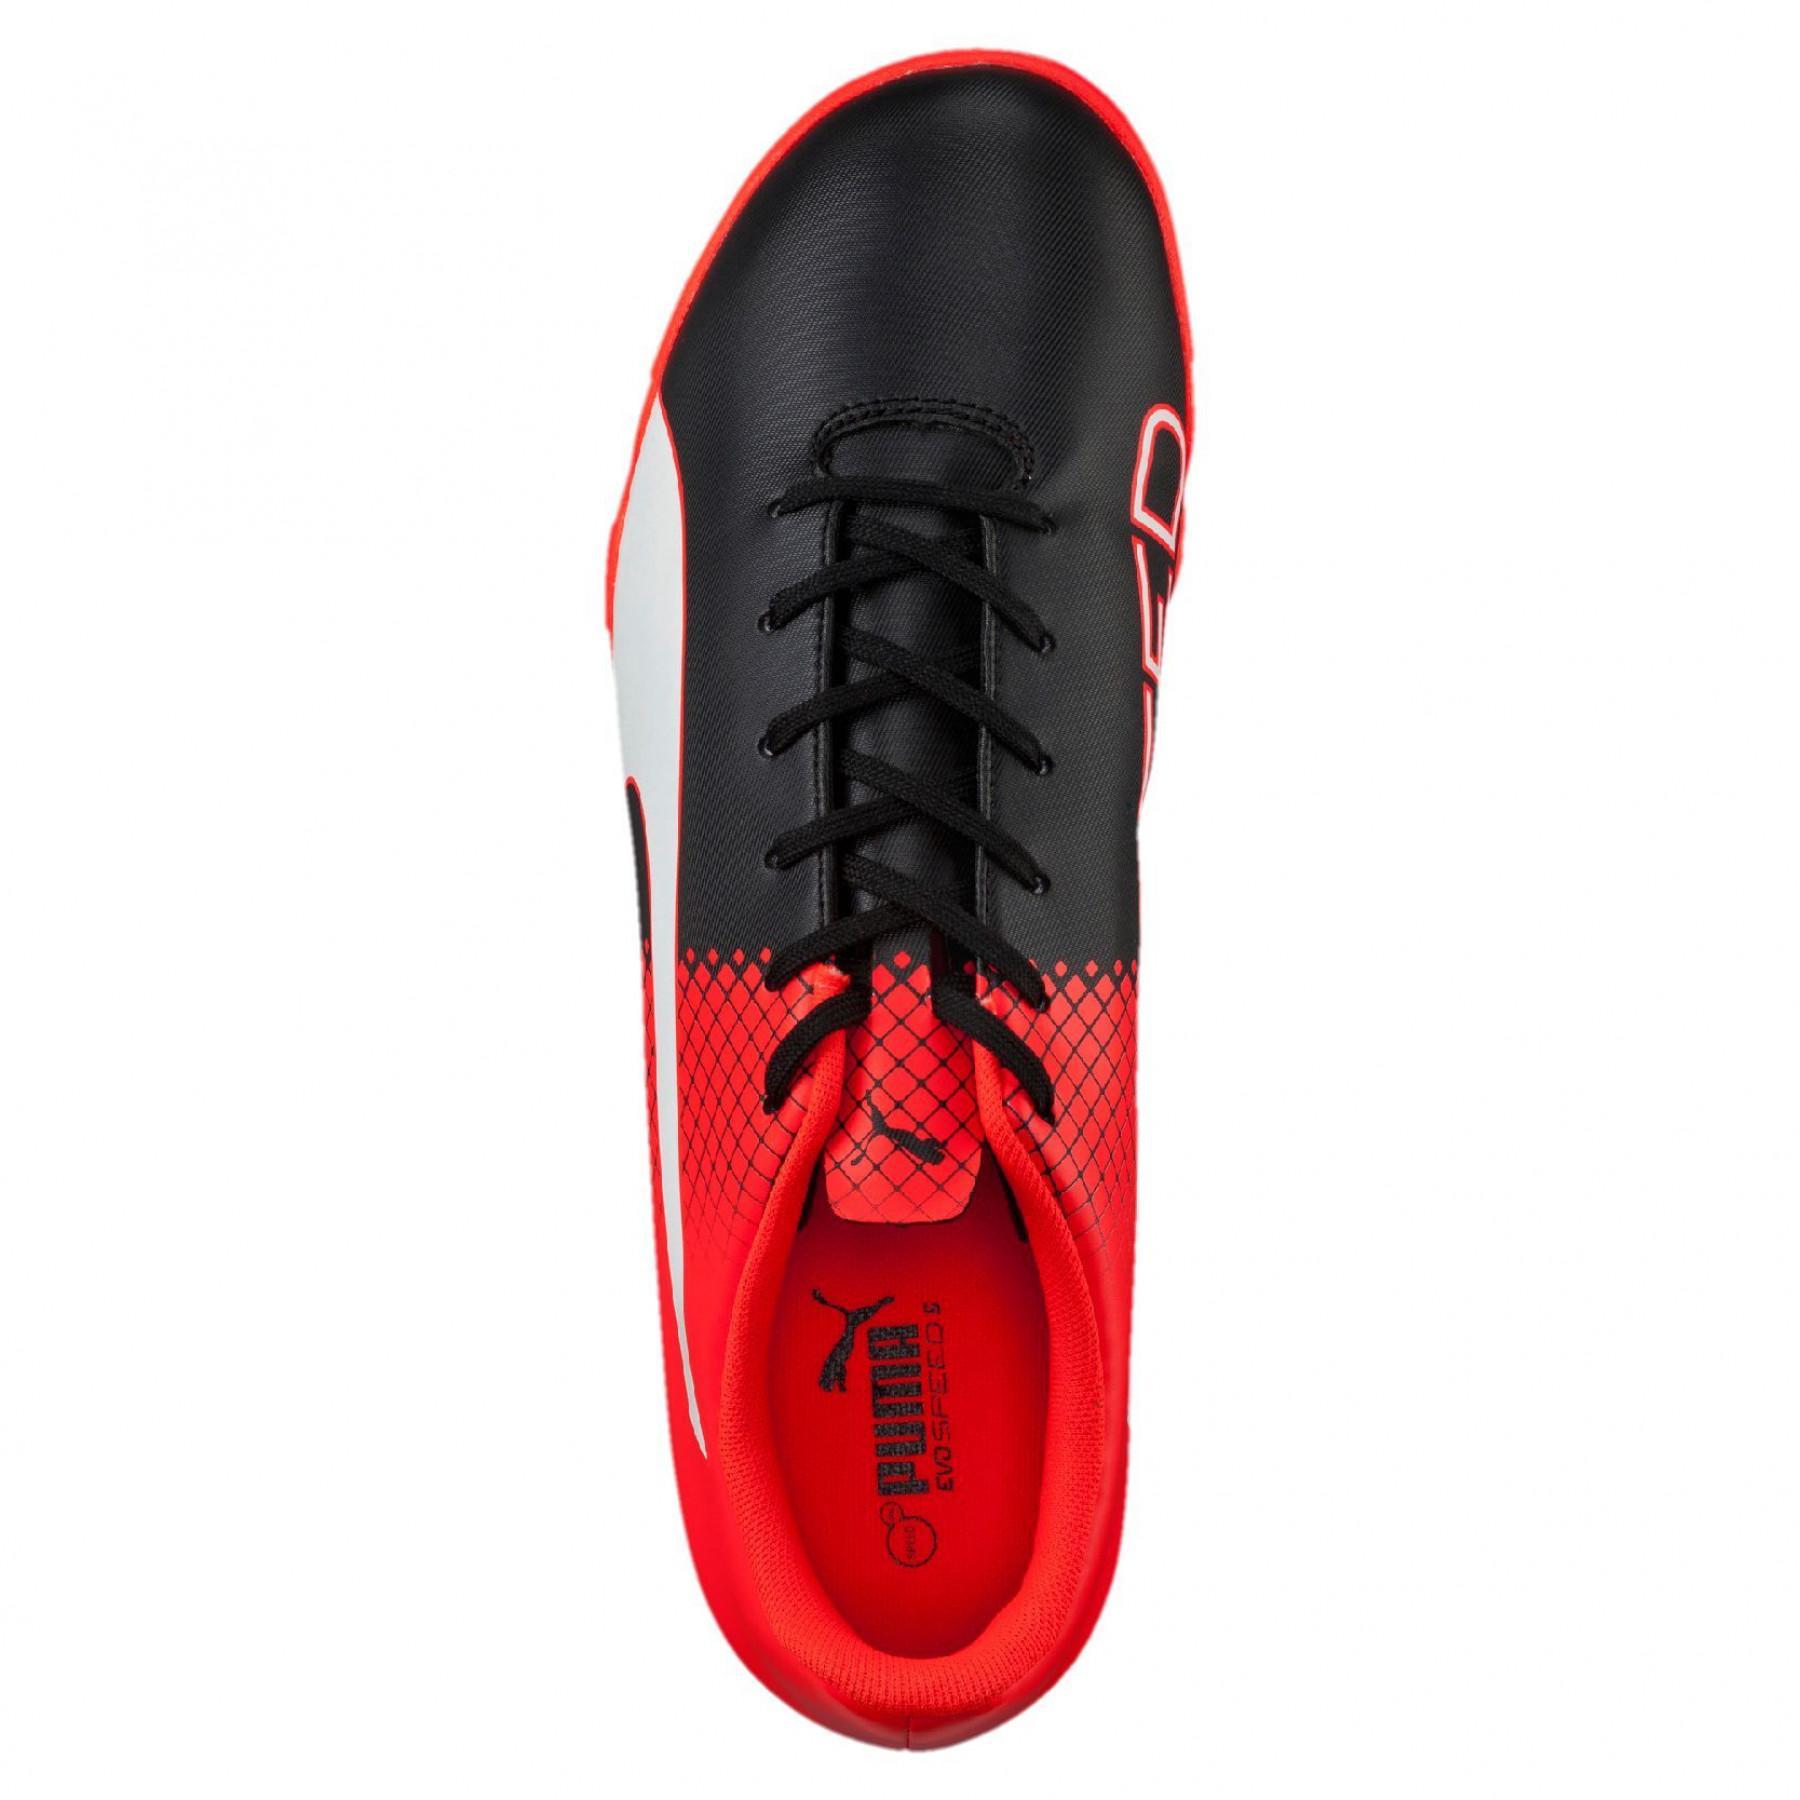 Schuhe Puma Evospeed 5.5 TT